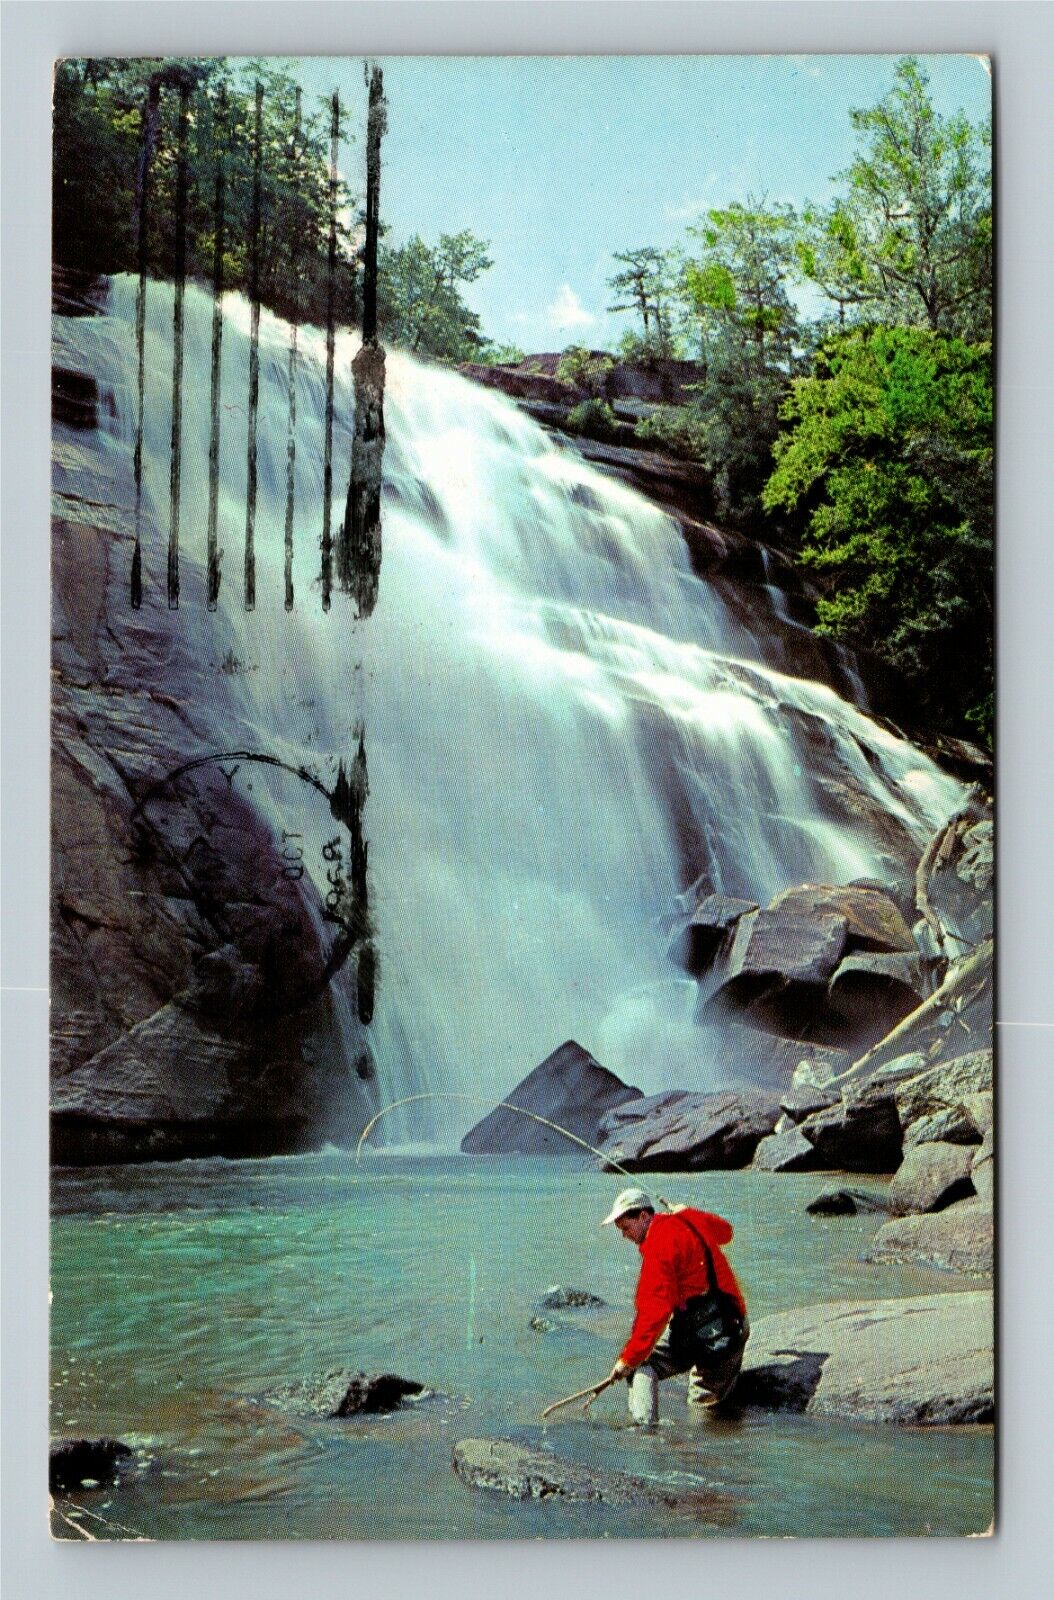 Trout Fishing, Scenic Mountain Waterfall, North Carolina c1968 Vintage Postcard